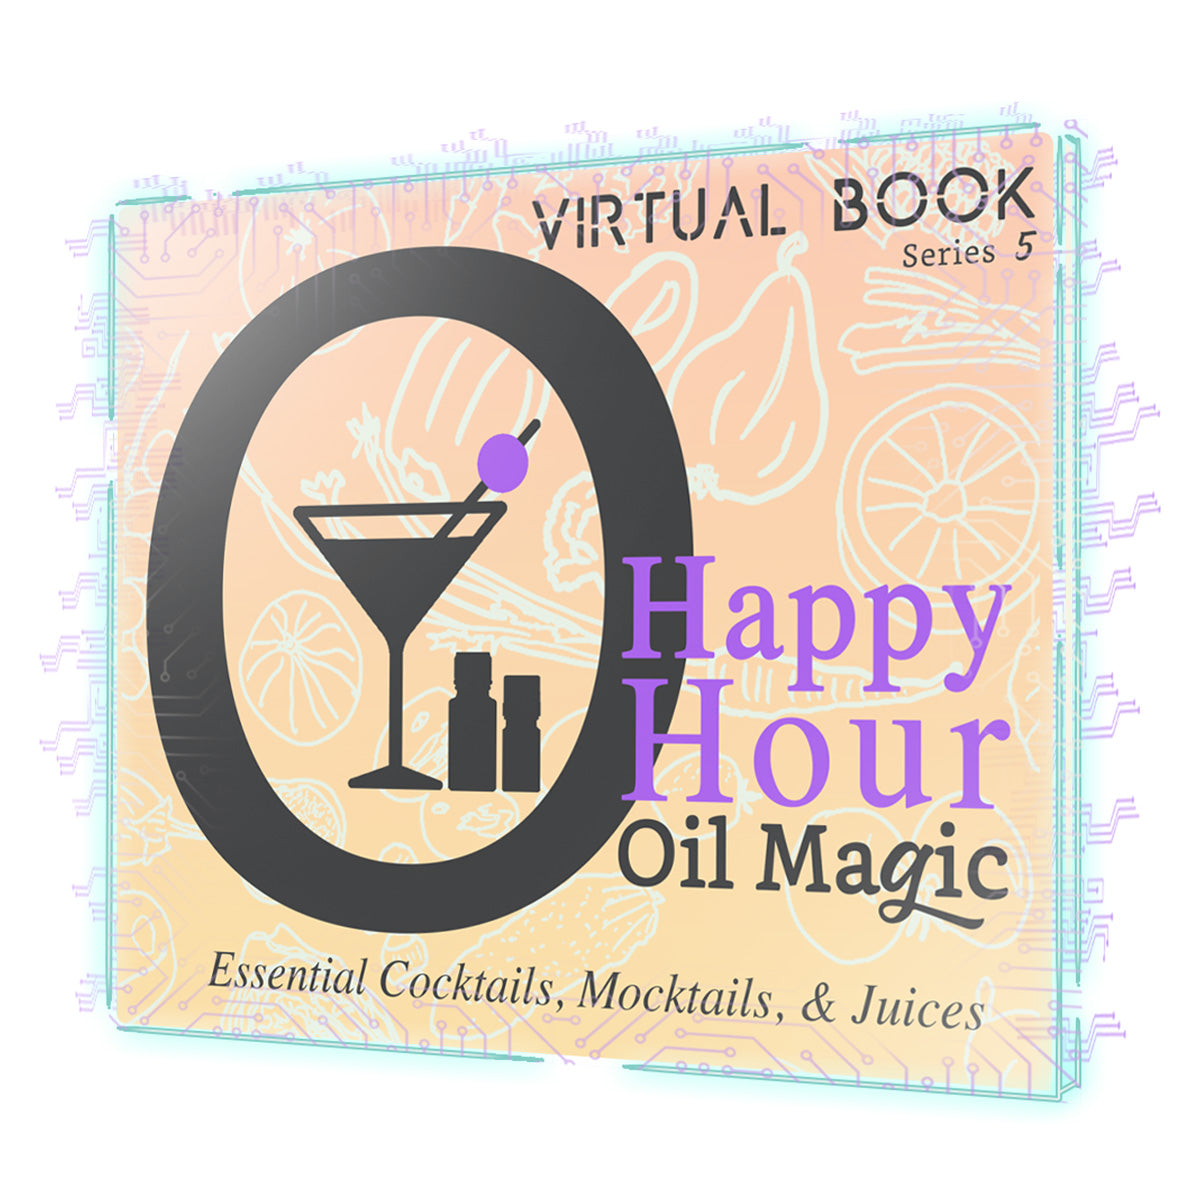 Happy Hour Oil Magic [Virtual Book]